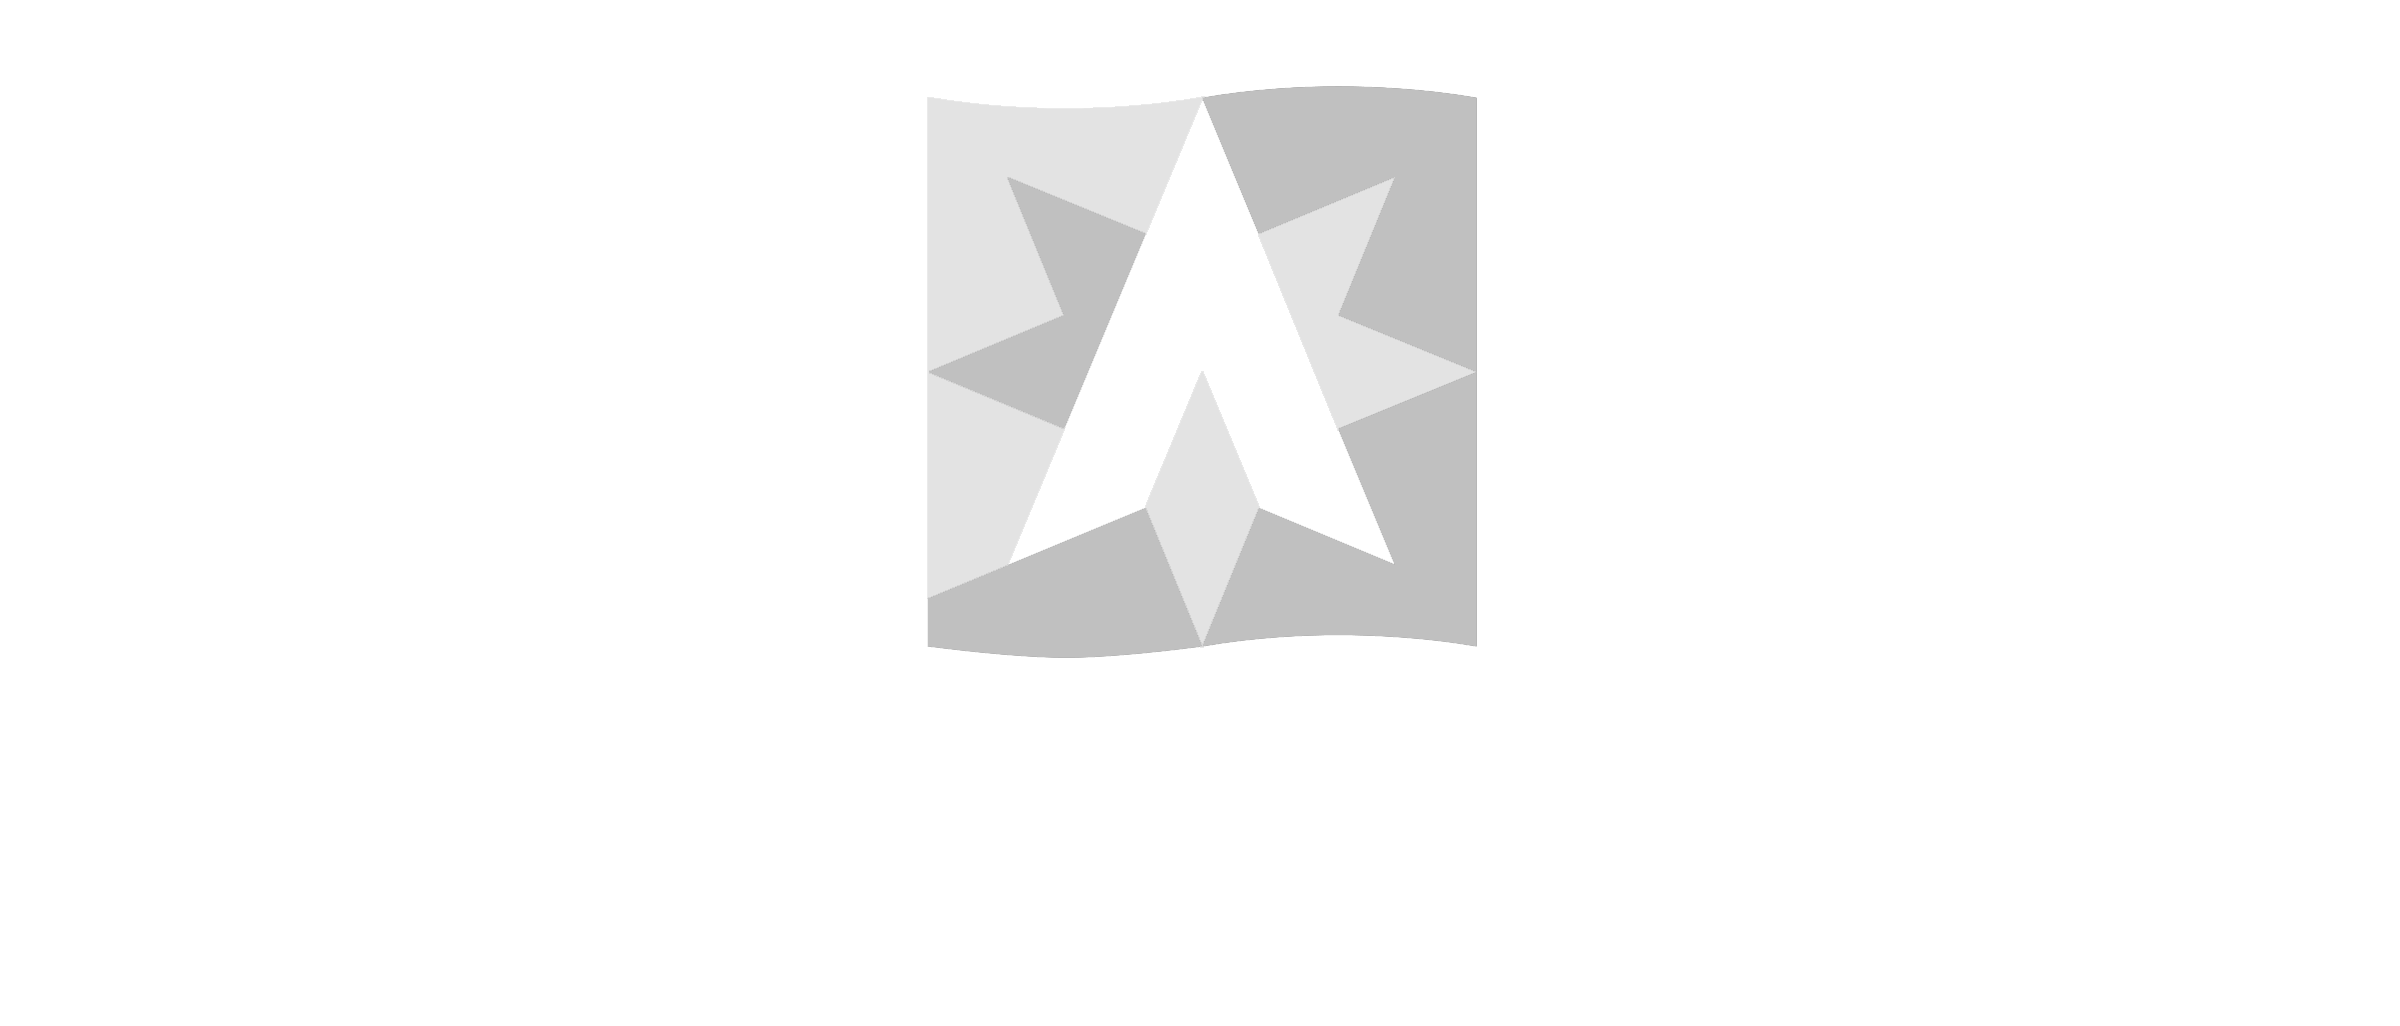 alliant-energy-company-logo-white